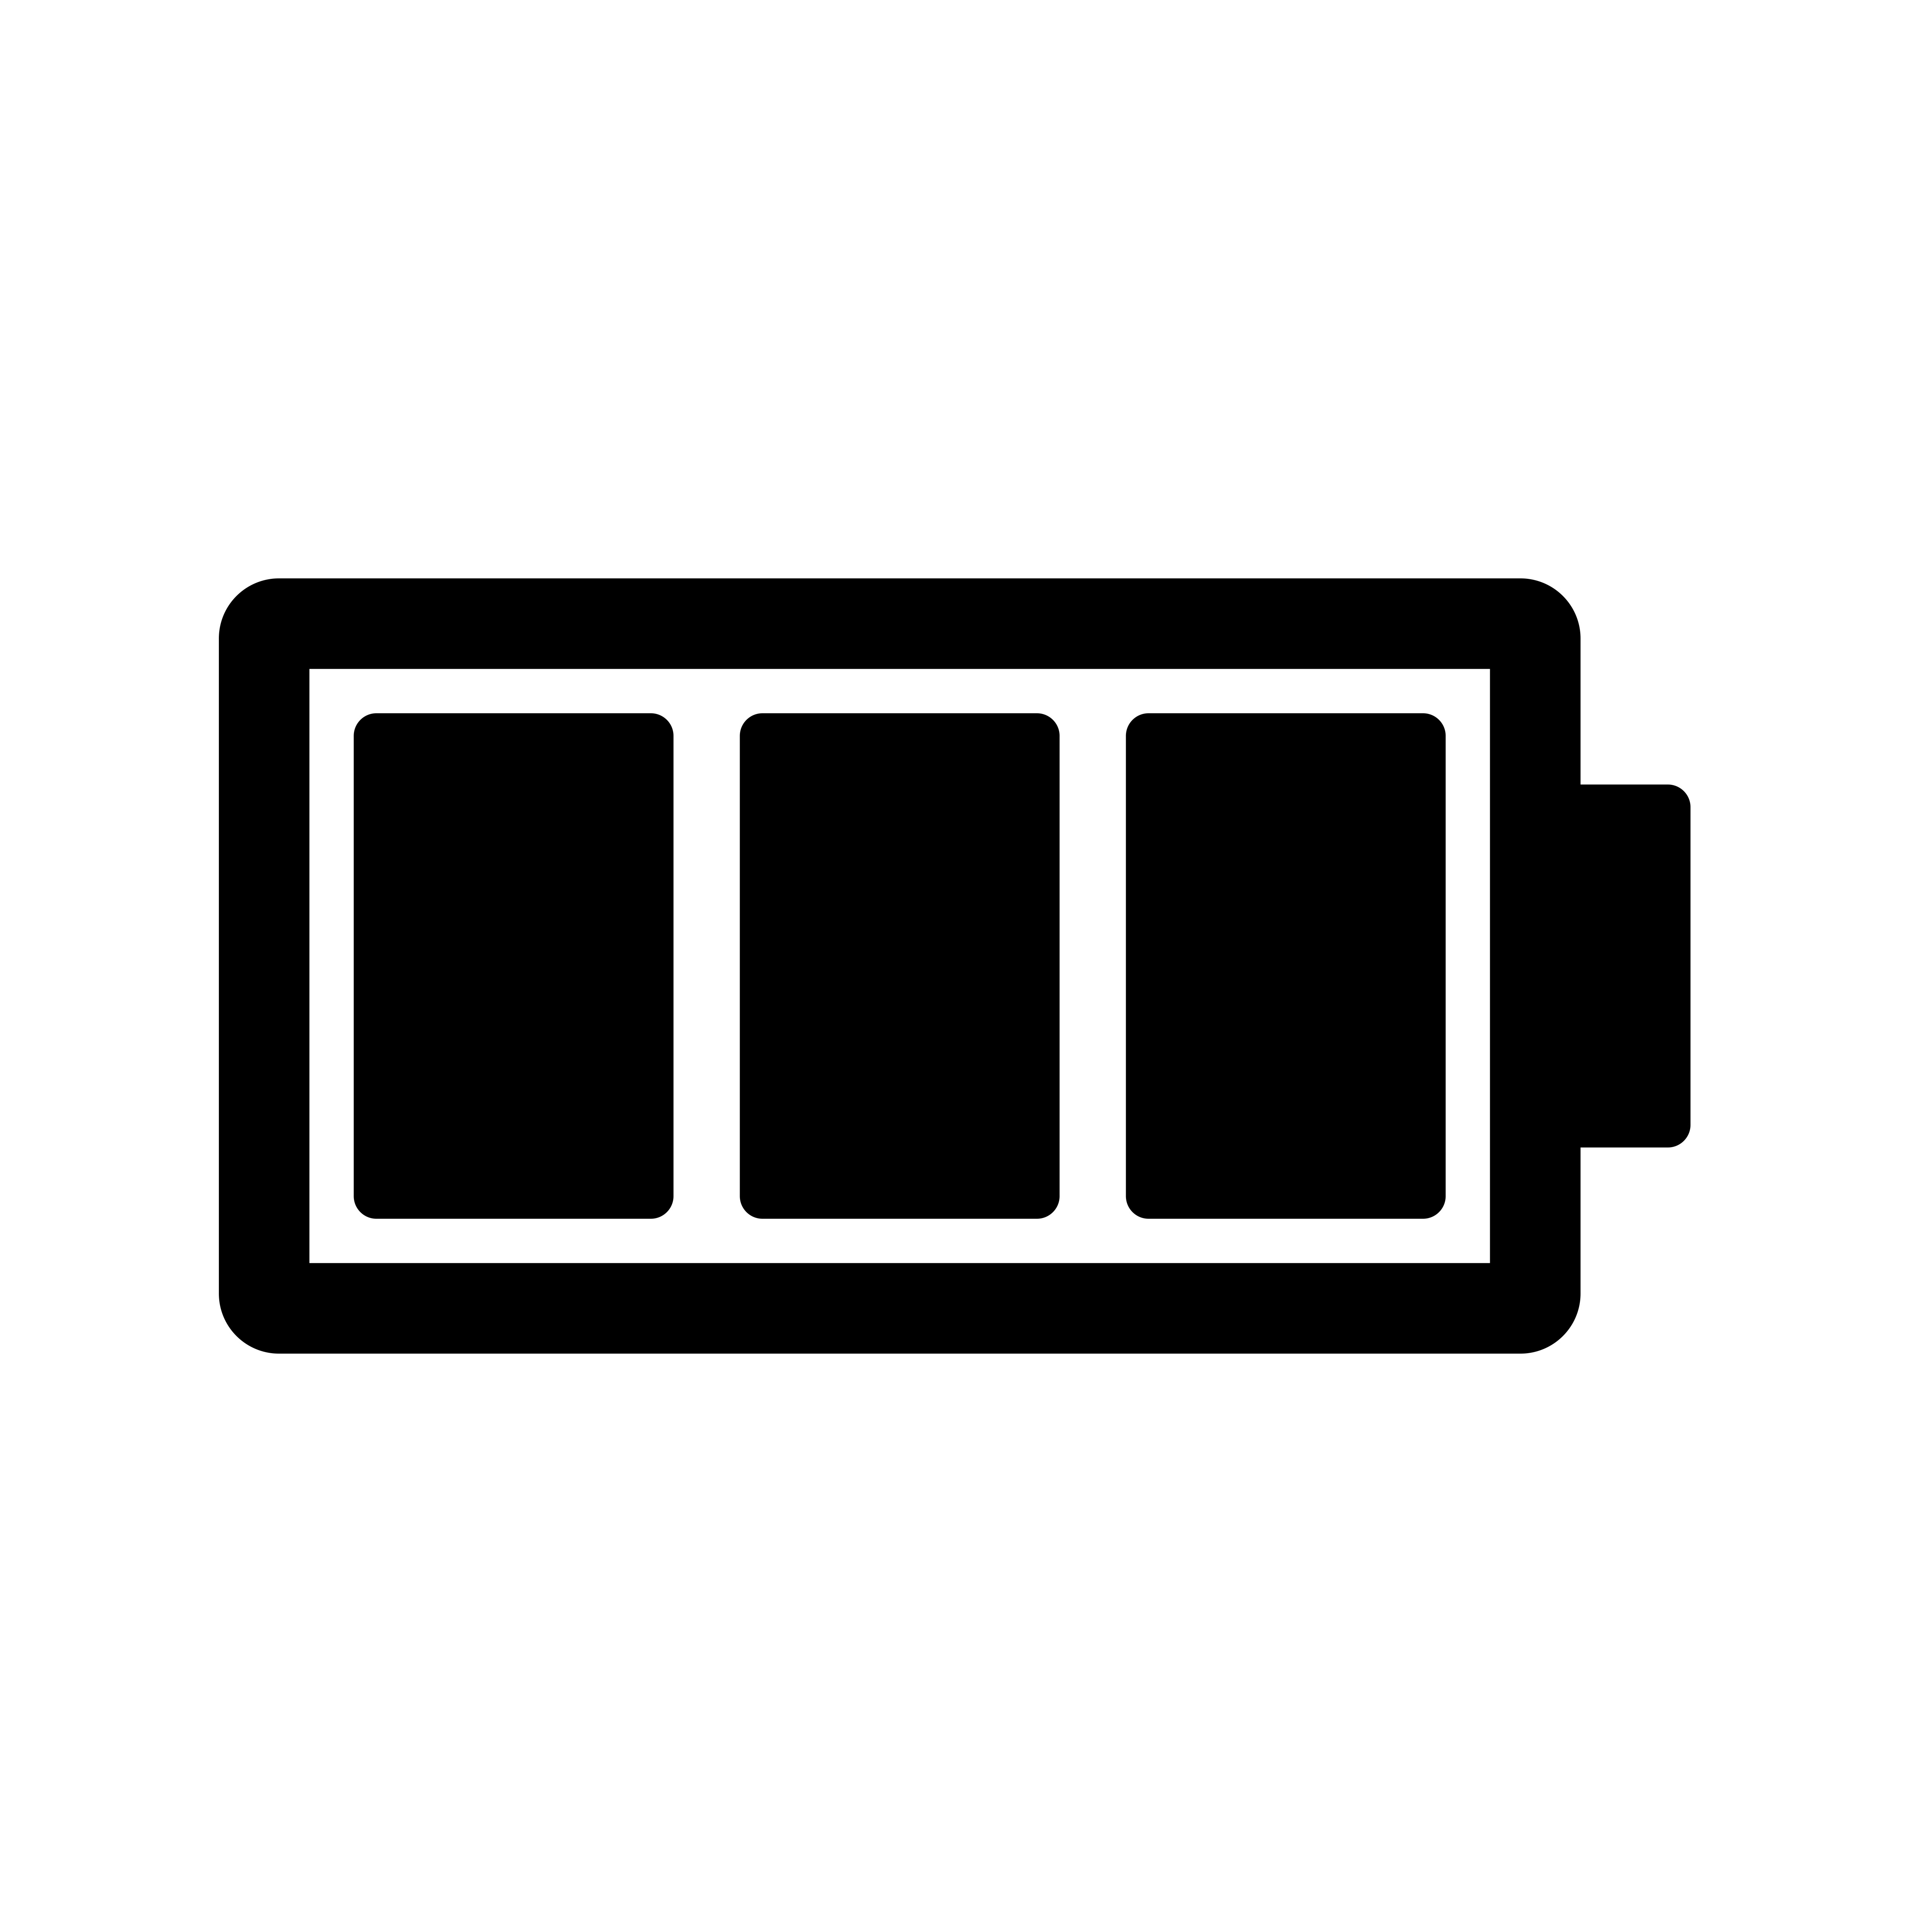 Значок батареи на экран. Iphone Battery icon. Значок аккумулятора. Знак батареи. Батарея пиктограмма.